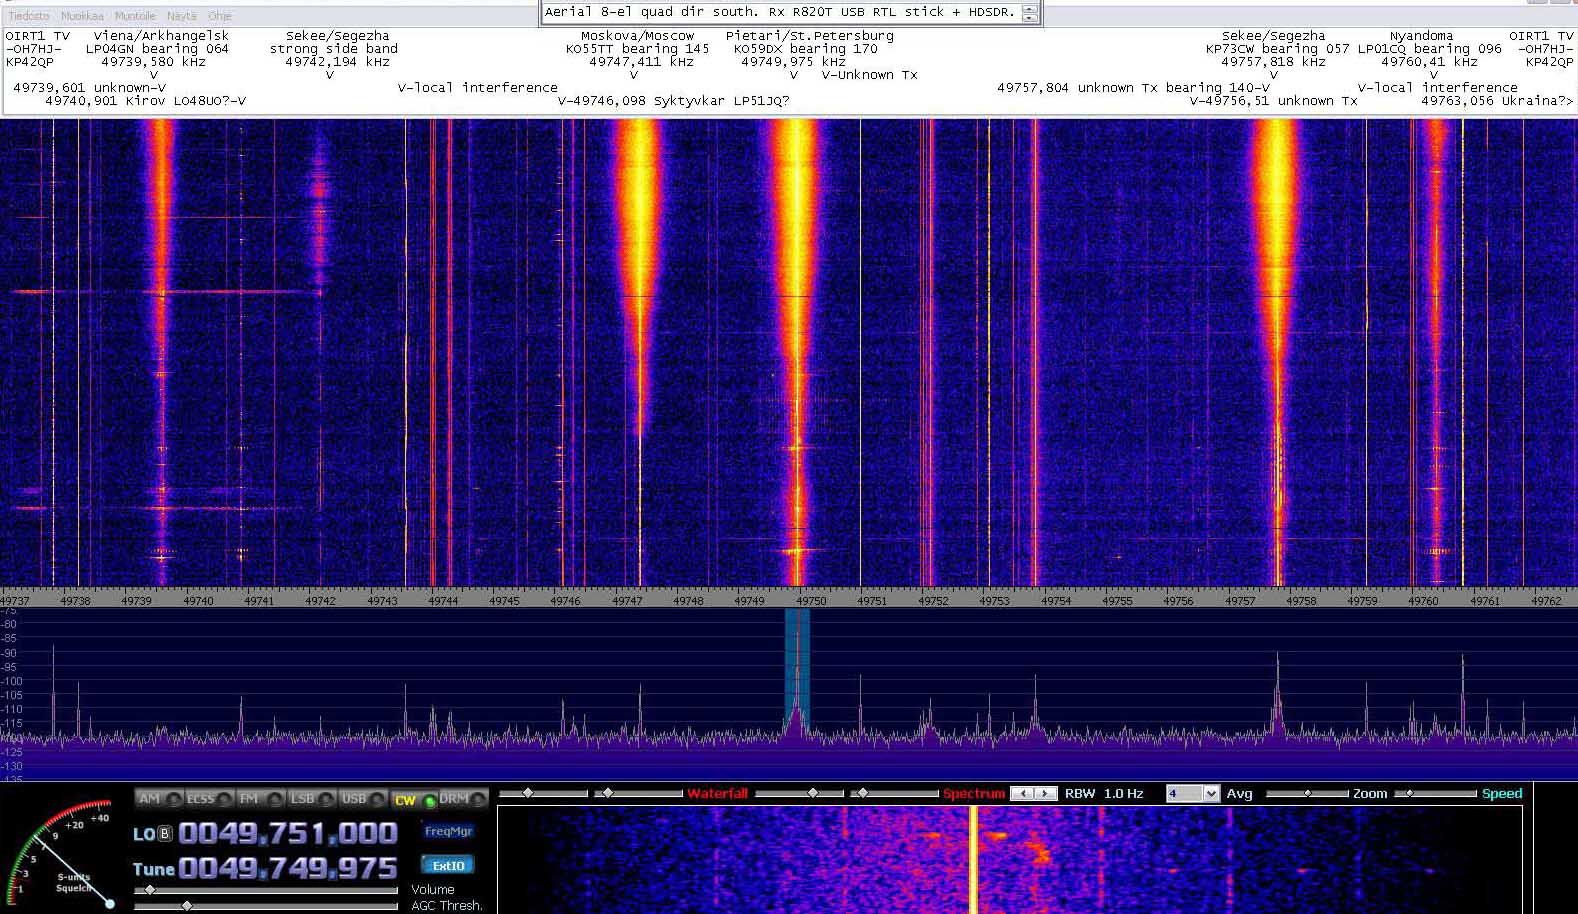 2014-01-01-54 - 49750 kHz OIRT1 TV - Simultaneous EDS flares on freq waterfall - St Petersburg TV feq - 8-el quagi dir S (c) OH7HJ.JPG